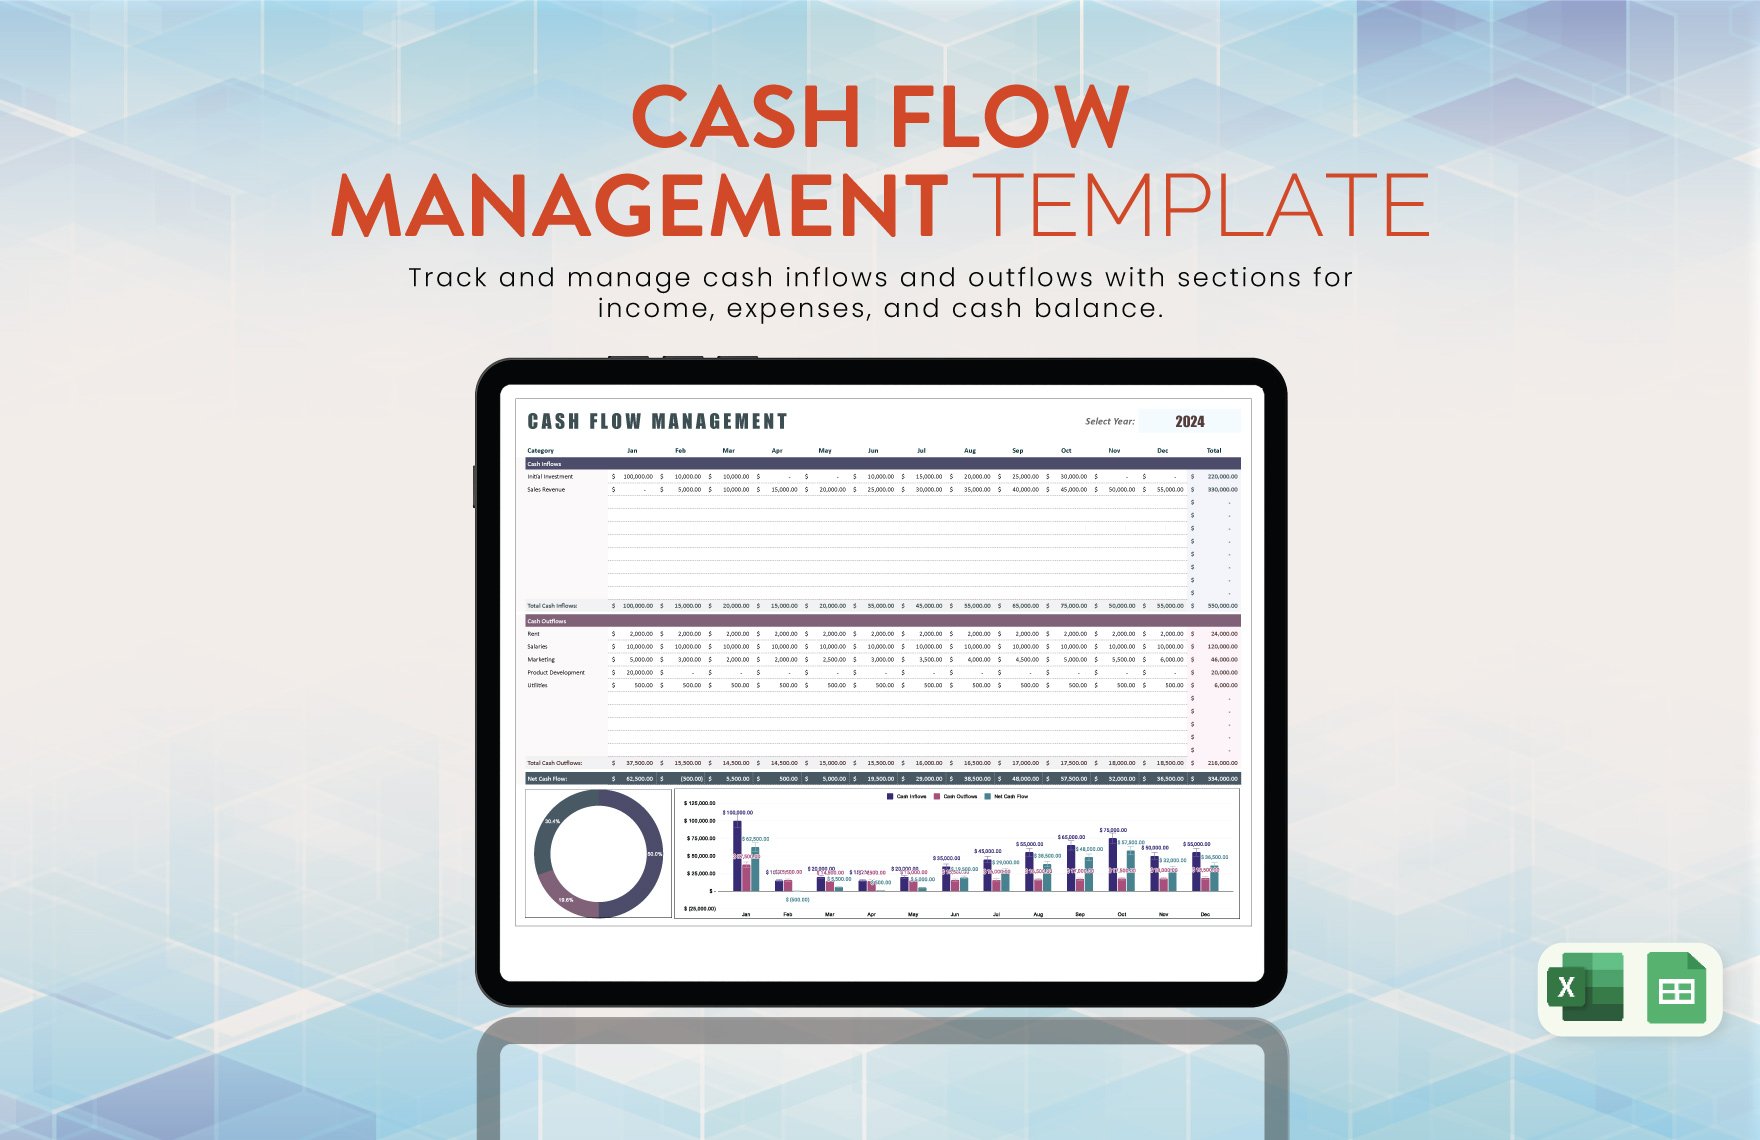 Cash Flow Management Template in Excel, Google Sheets